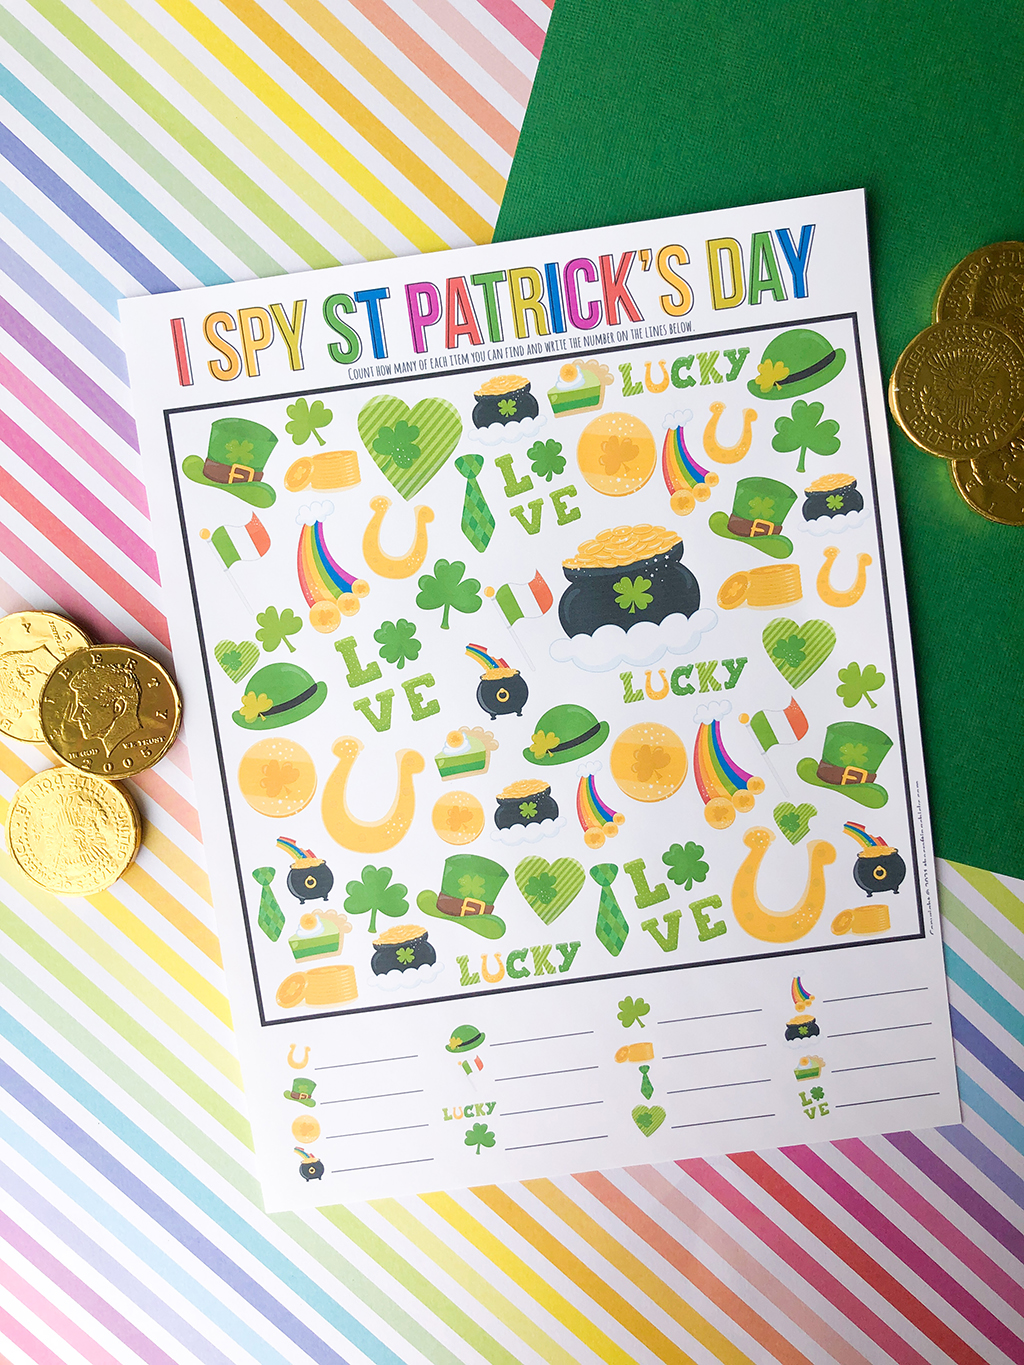 Free St. Patrick's Day I Spy Game - My Pinterventures